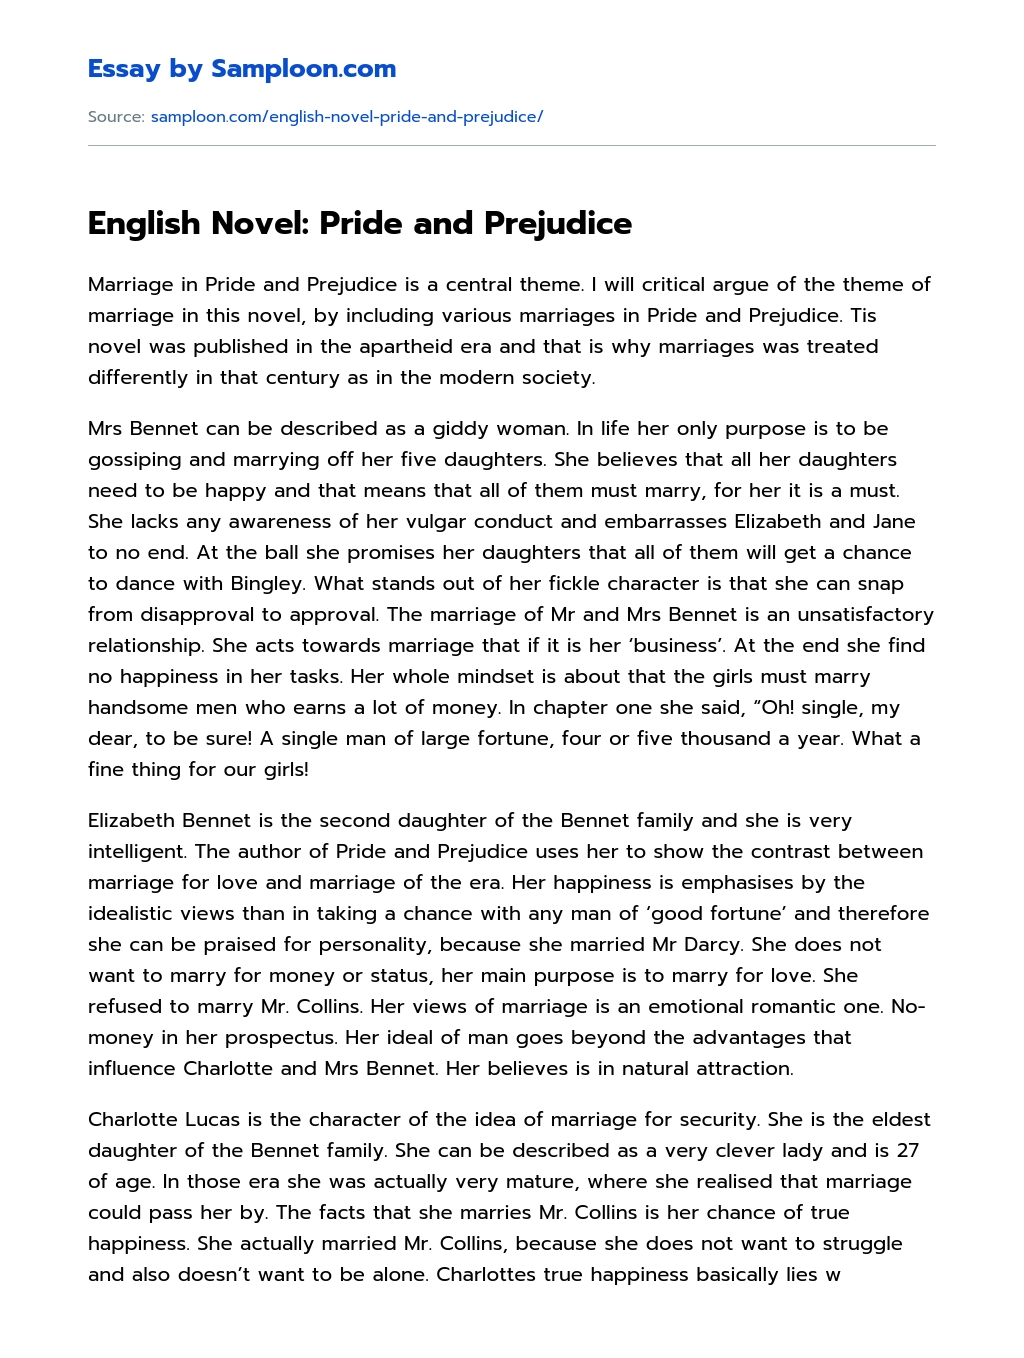 English Novel: Pride and Prejudice essay